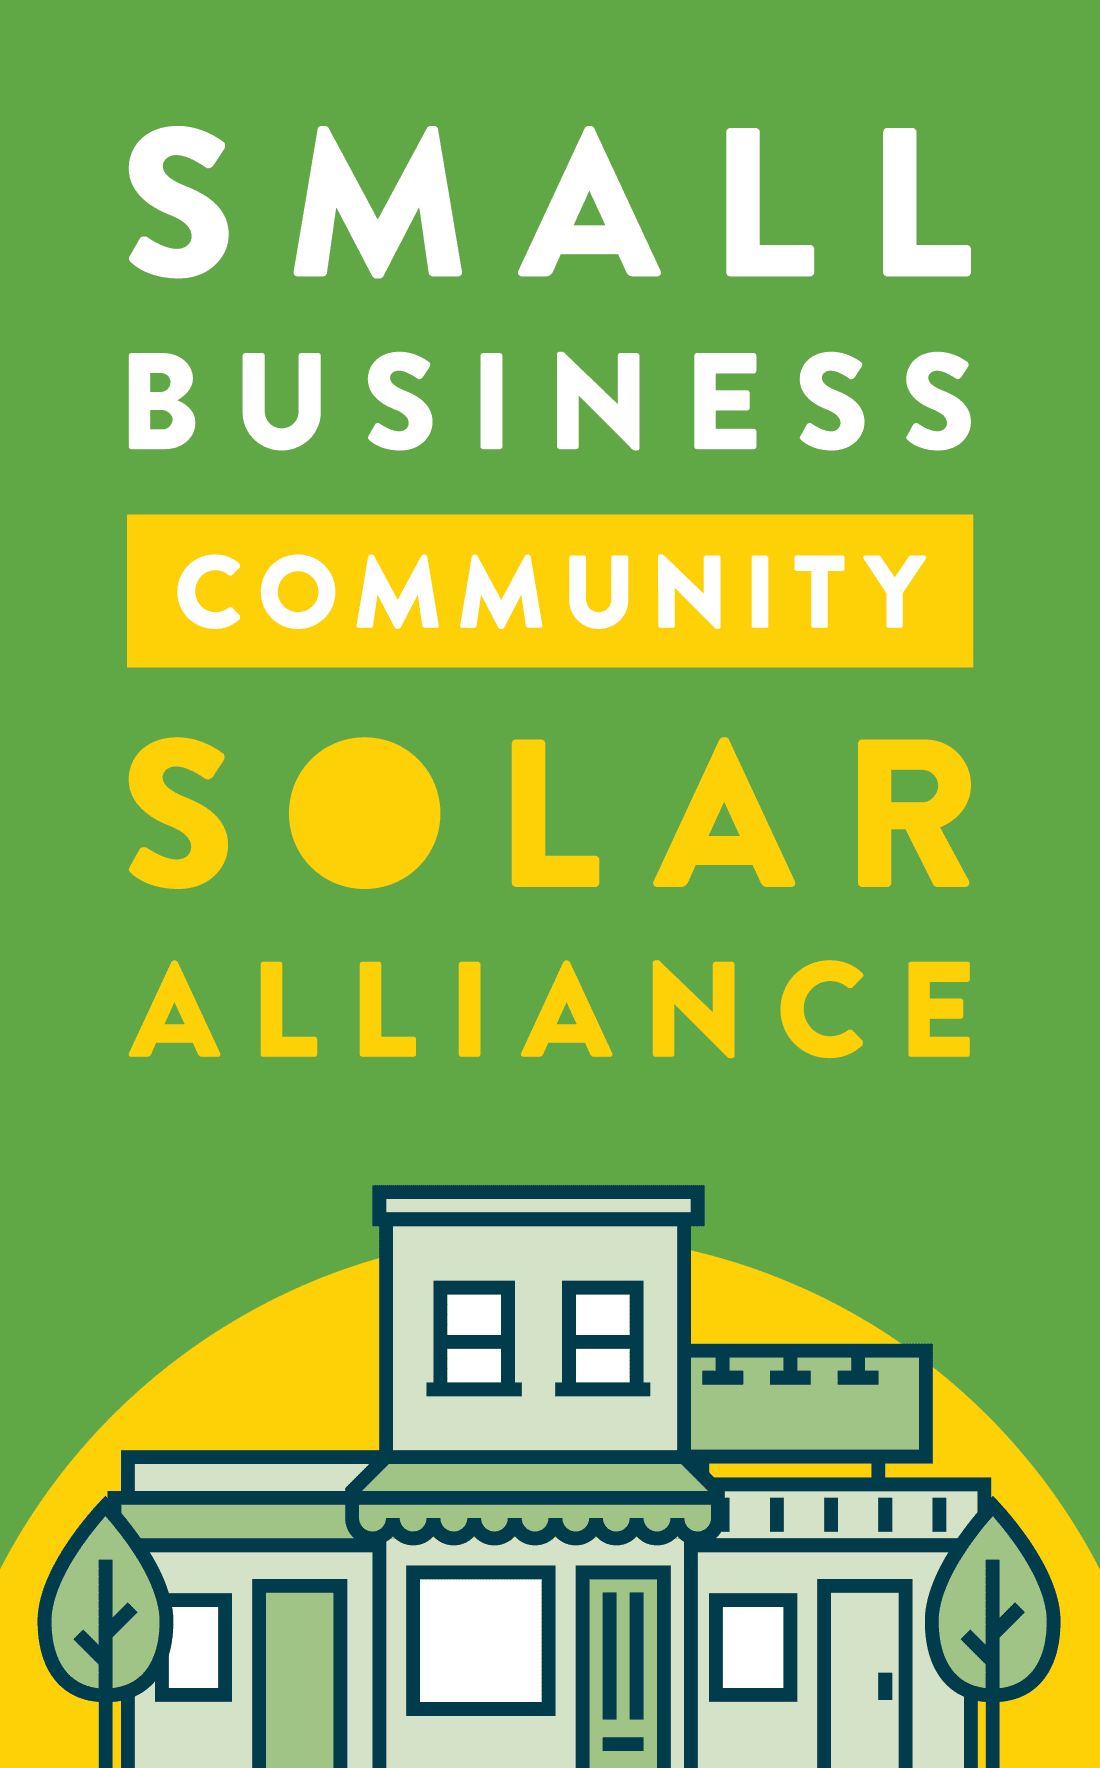 Small Business Community Solar Alliance